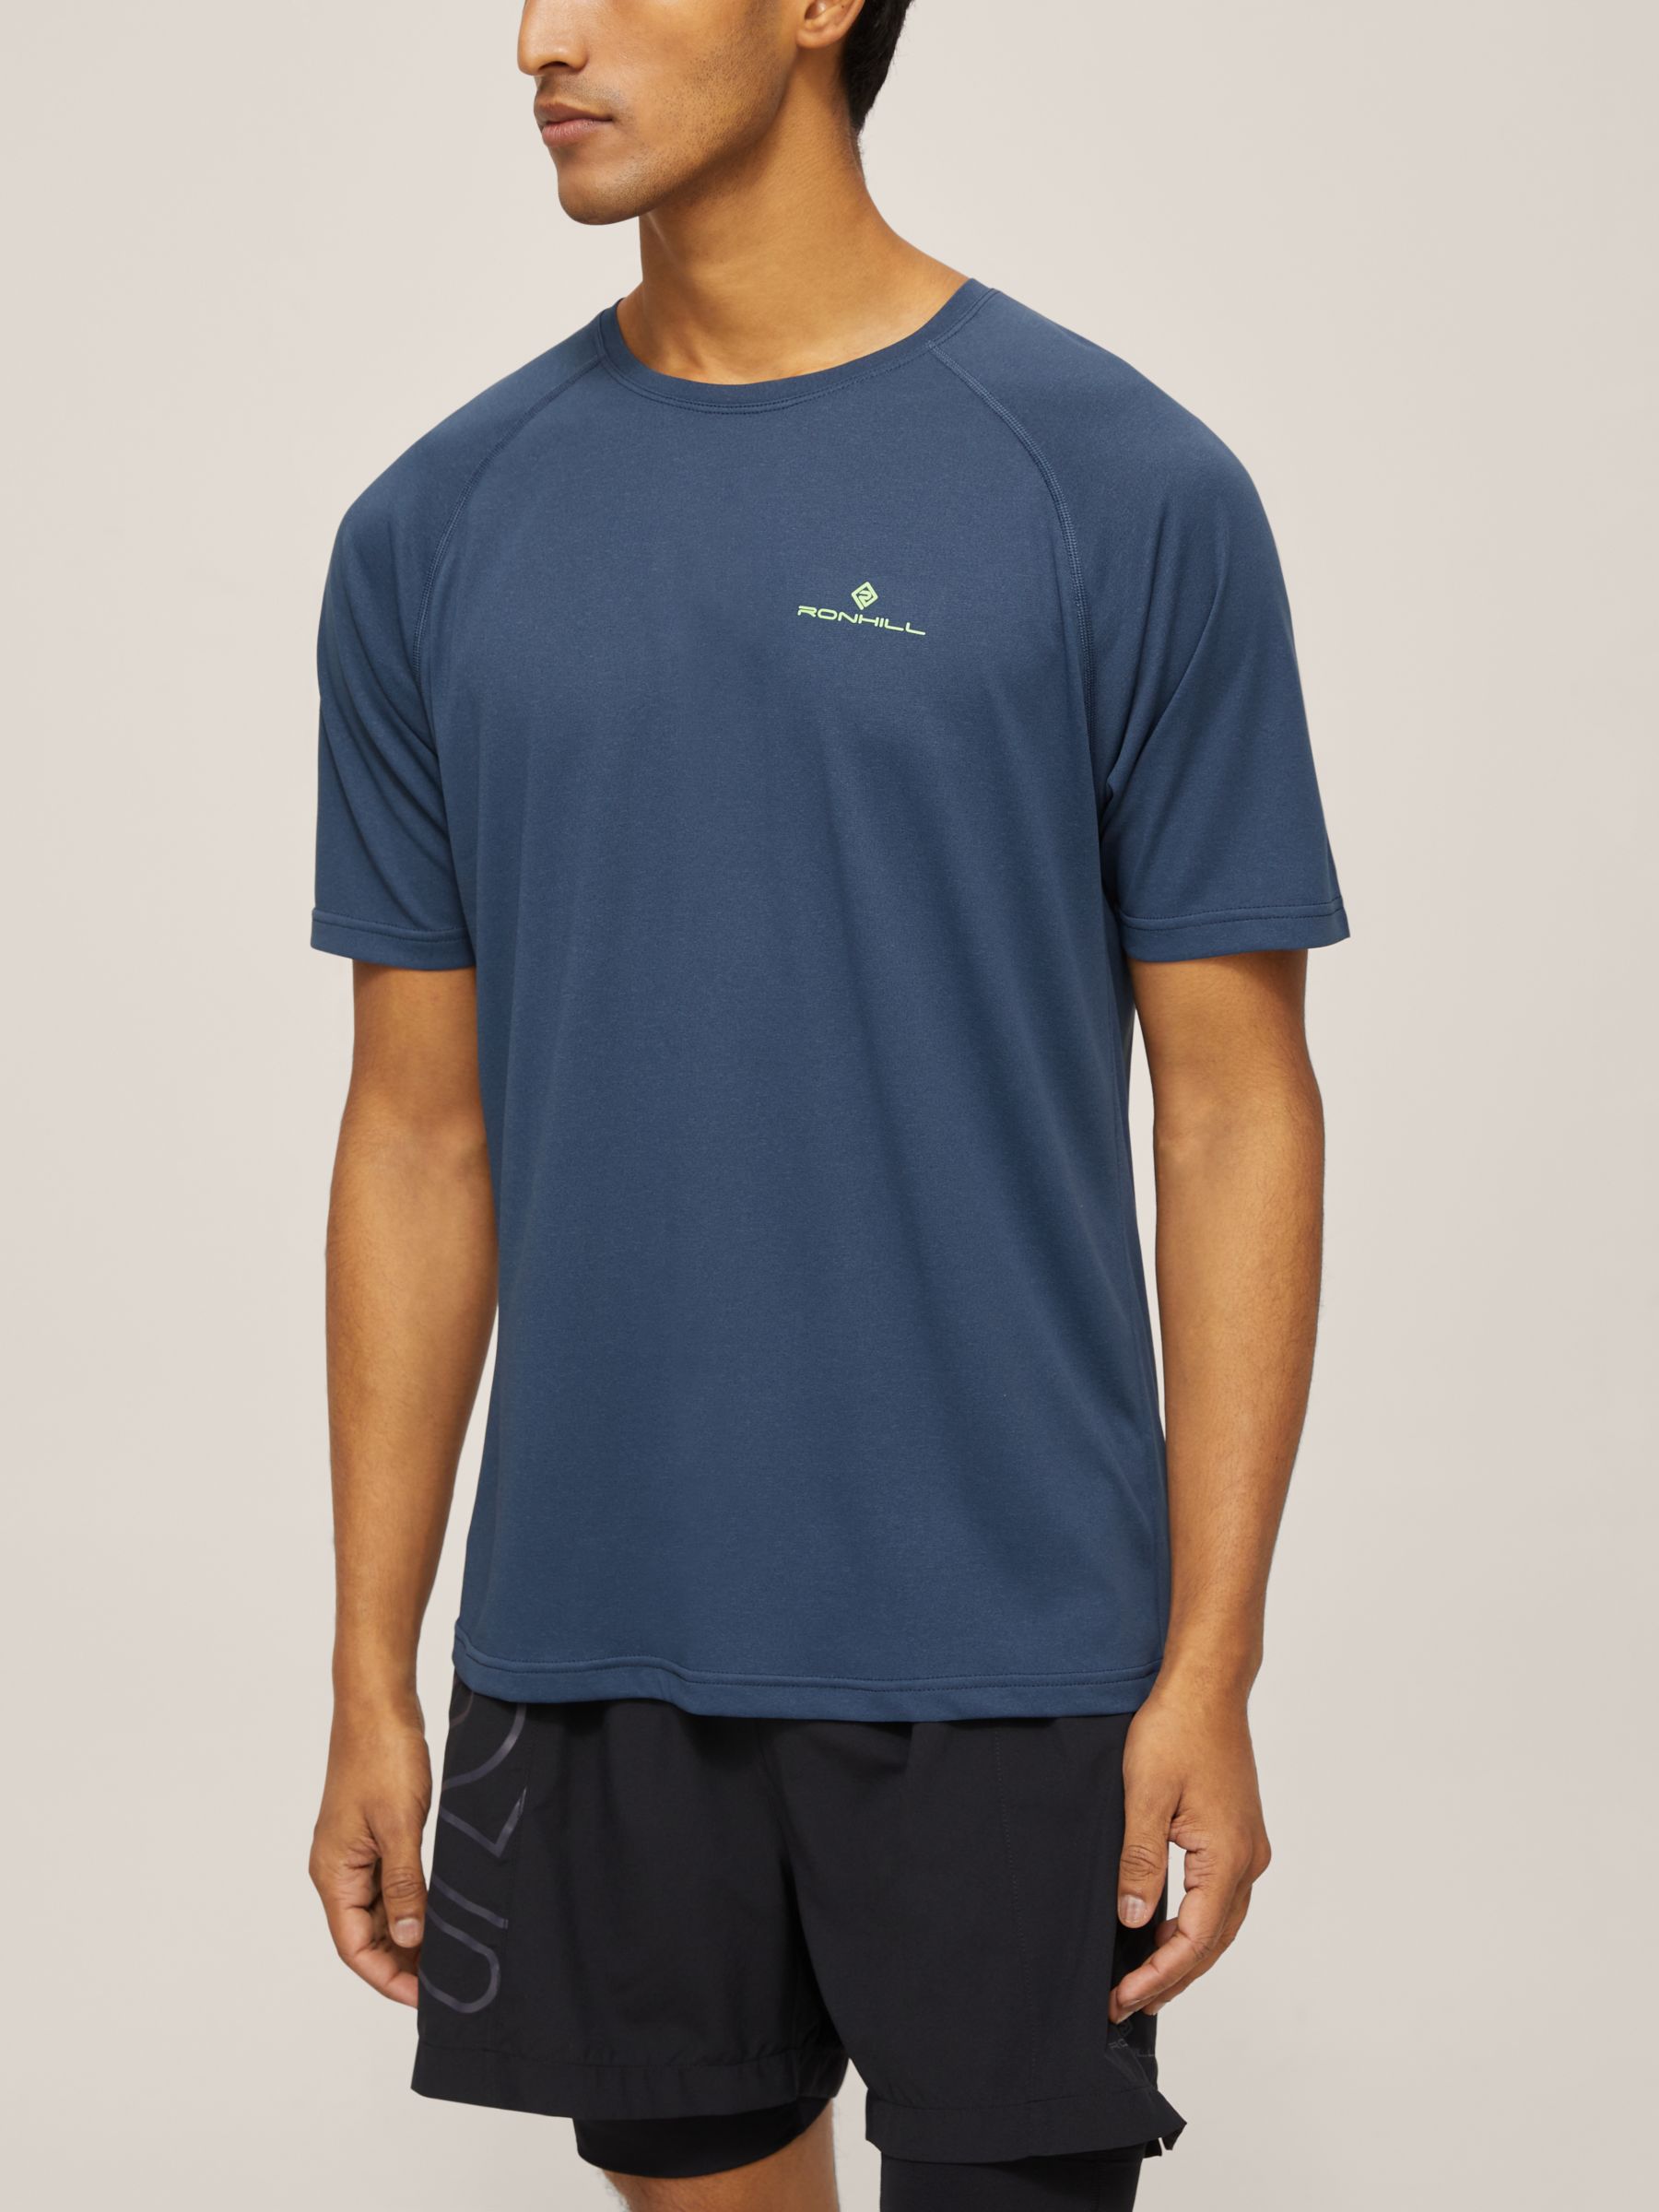 Ronhill Mens Core Running Short Sleeve T-Shirt Performance Workout Peacoat 